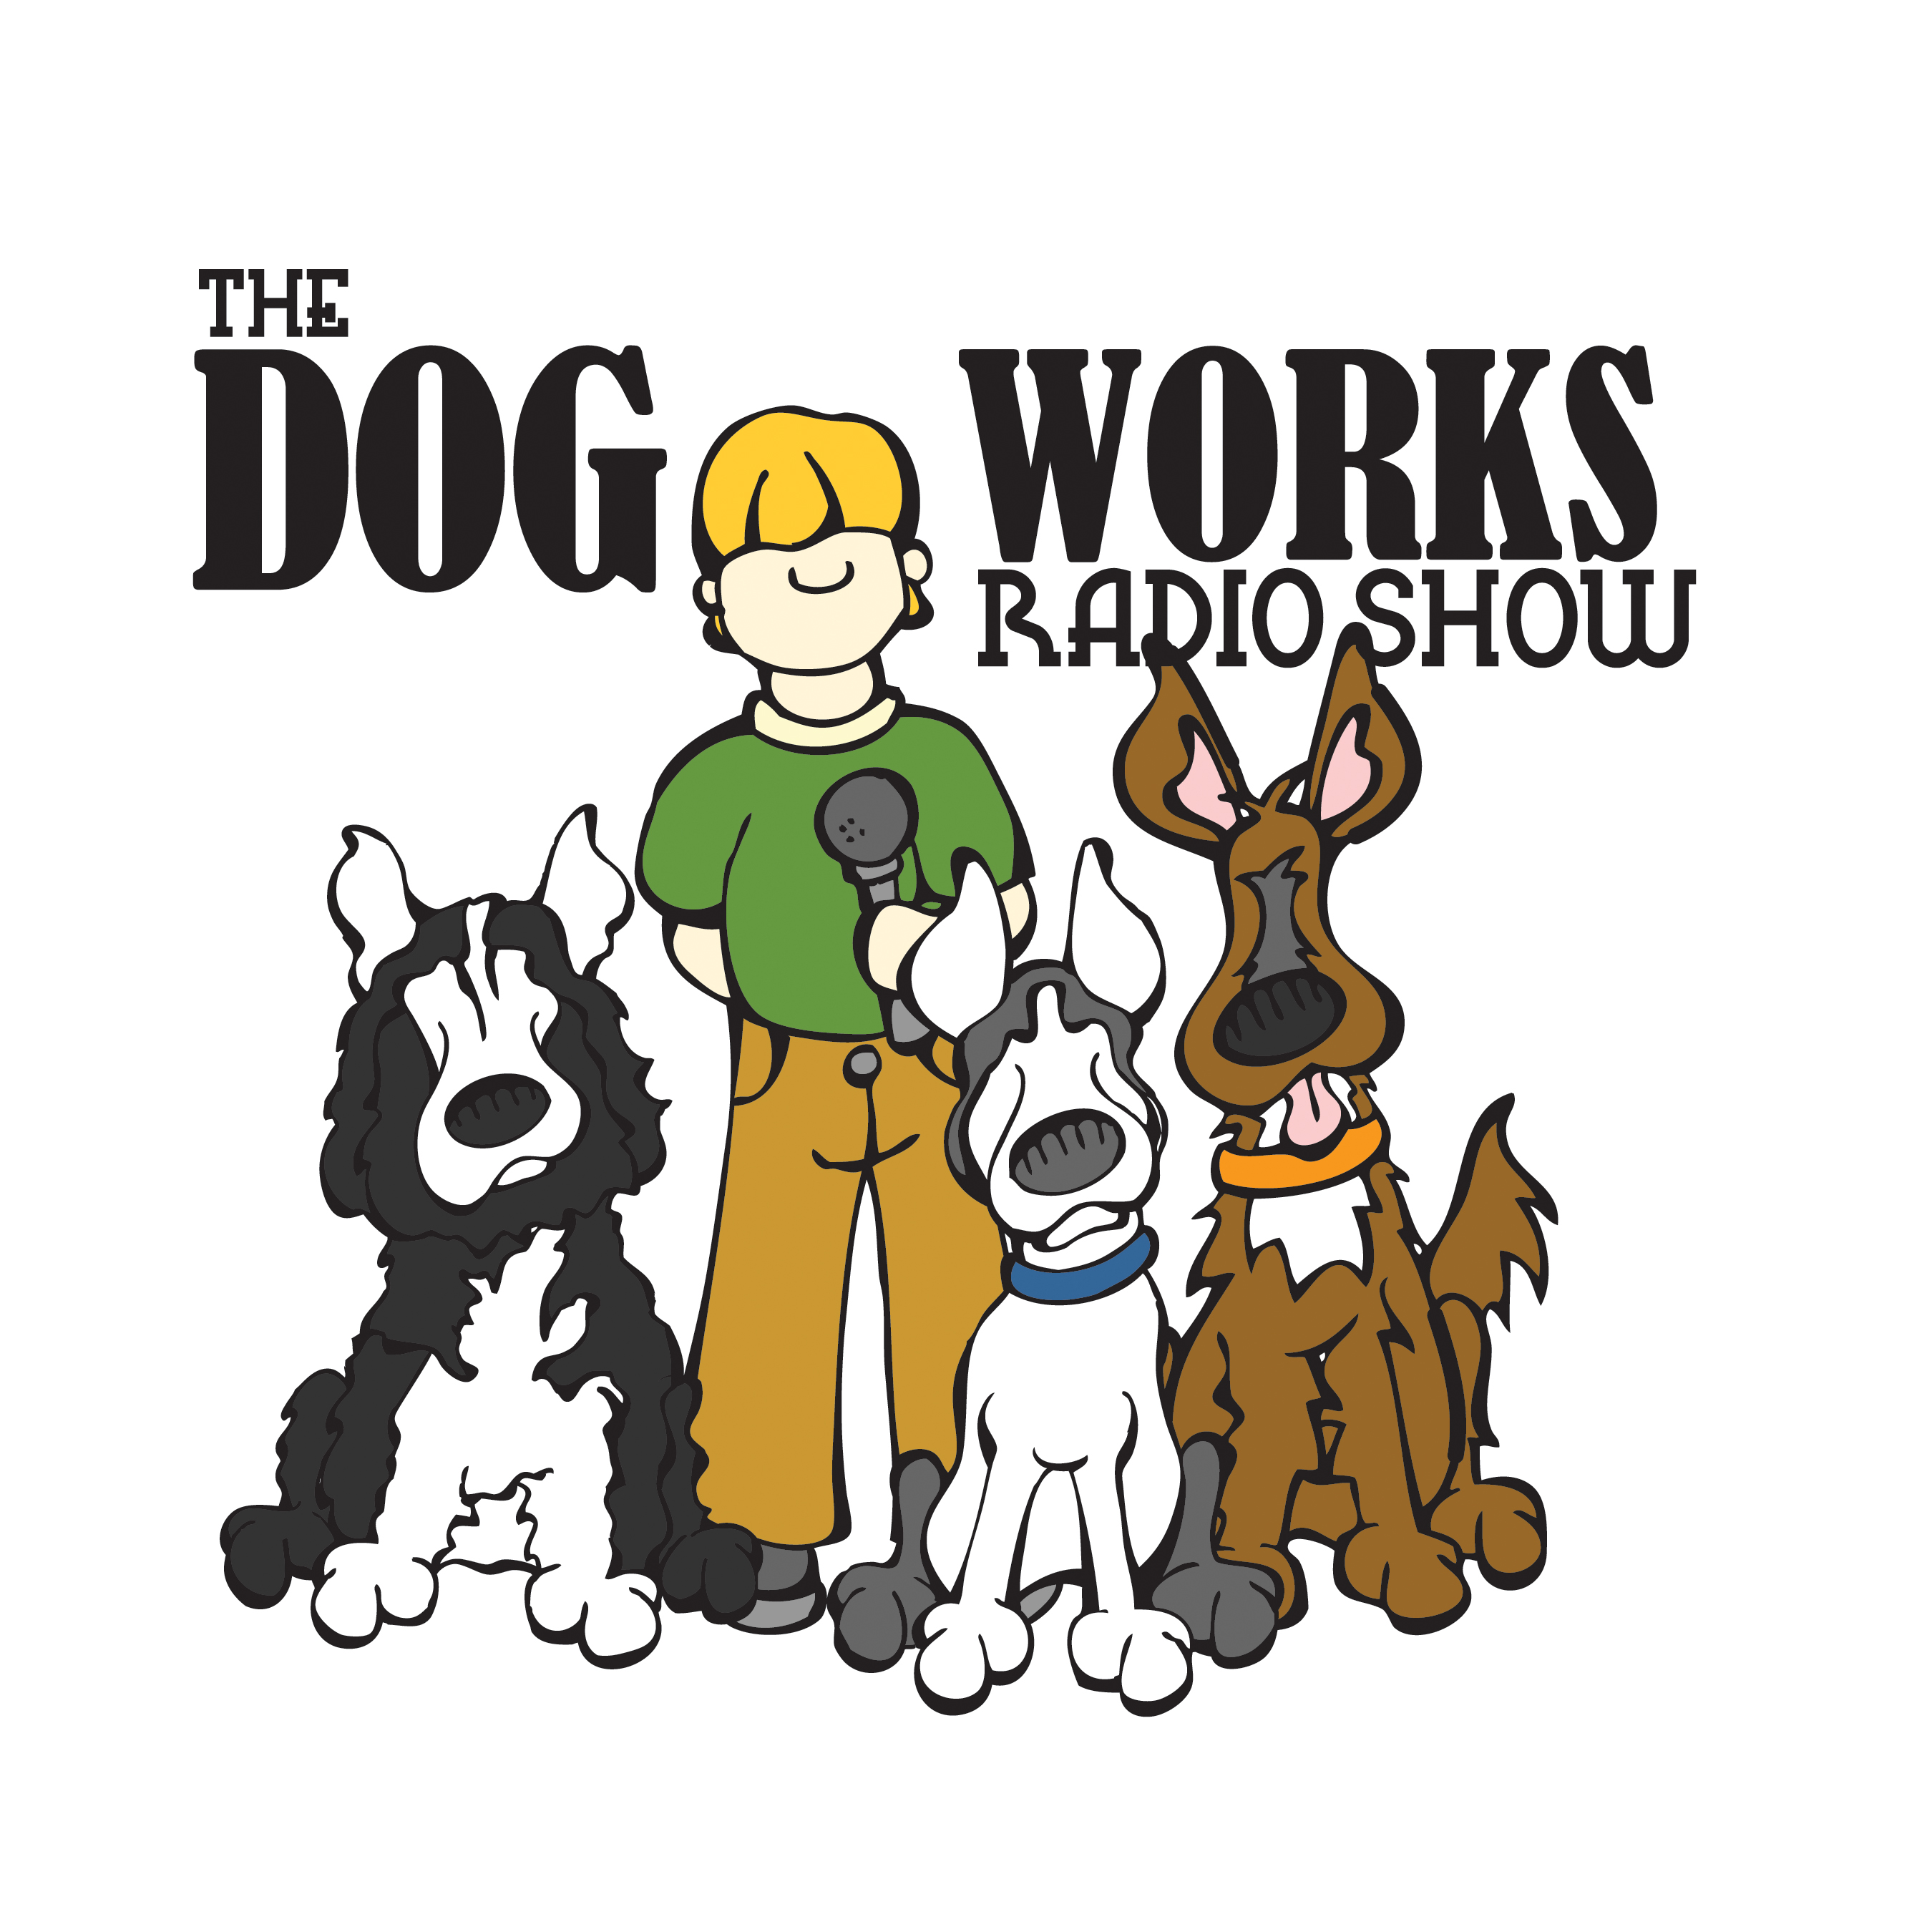 Radio and Dog. Радио Pets work. Works Dog. Dog on Radio. Radio pets